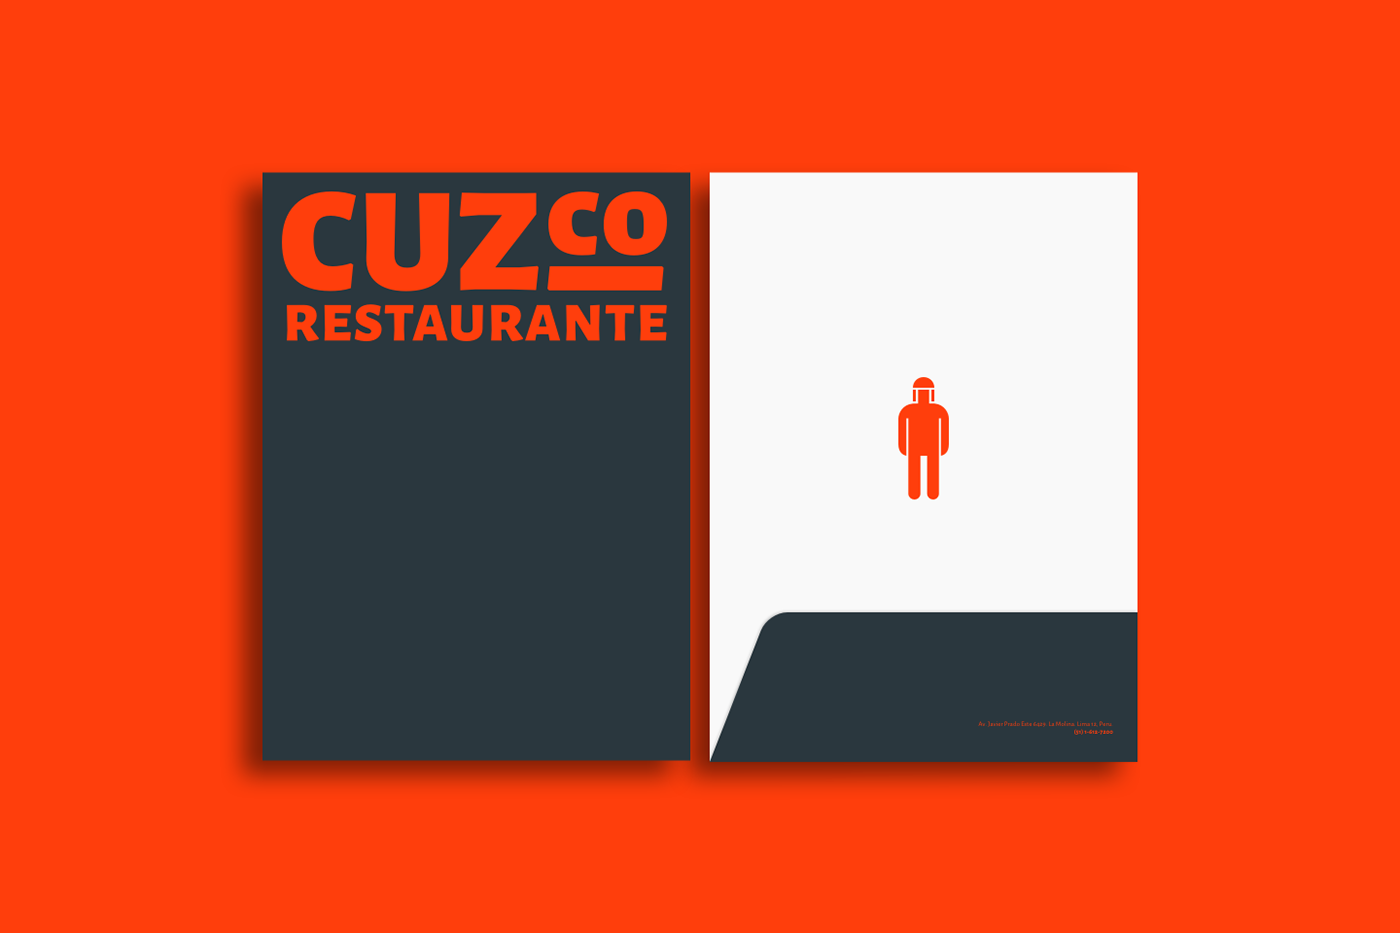 Cuzco peru restaurant caracas venezuela yorlmar campos identity Huerta tipografica juan pablo Peral alegreya